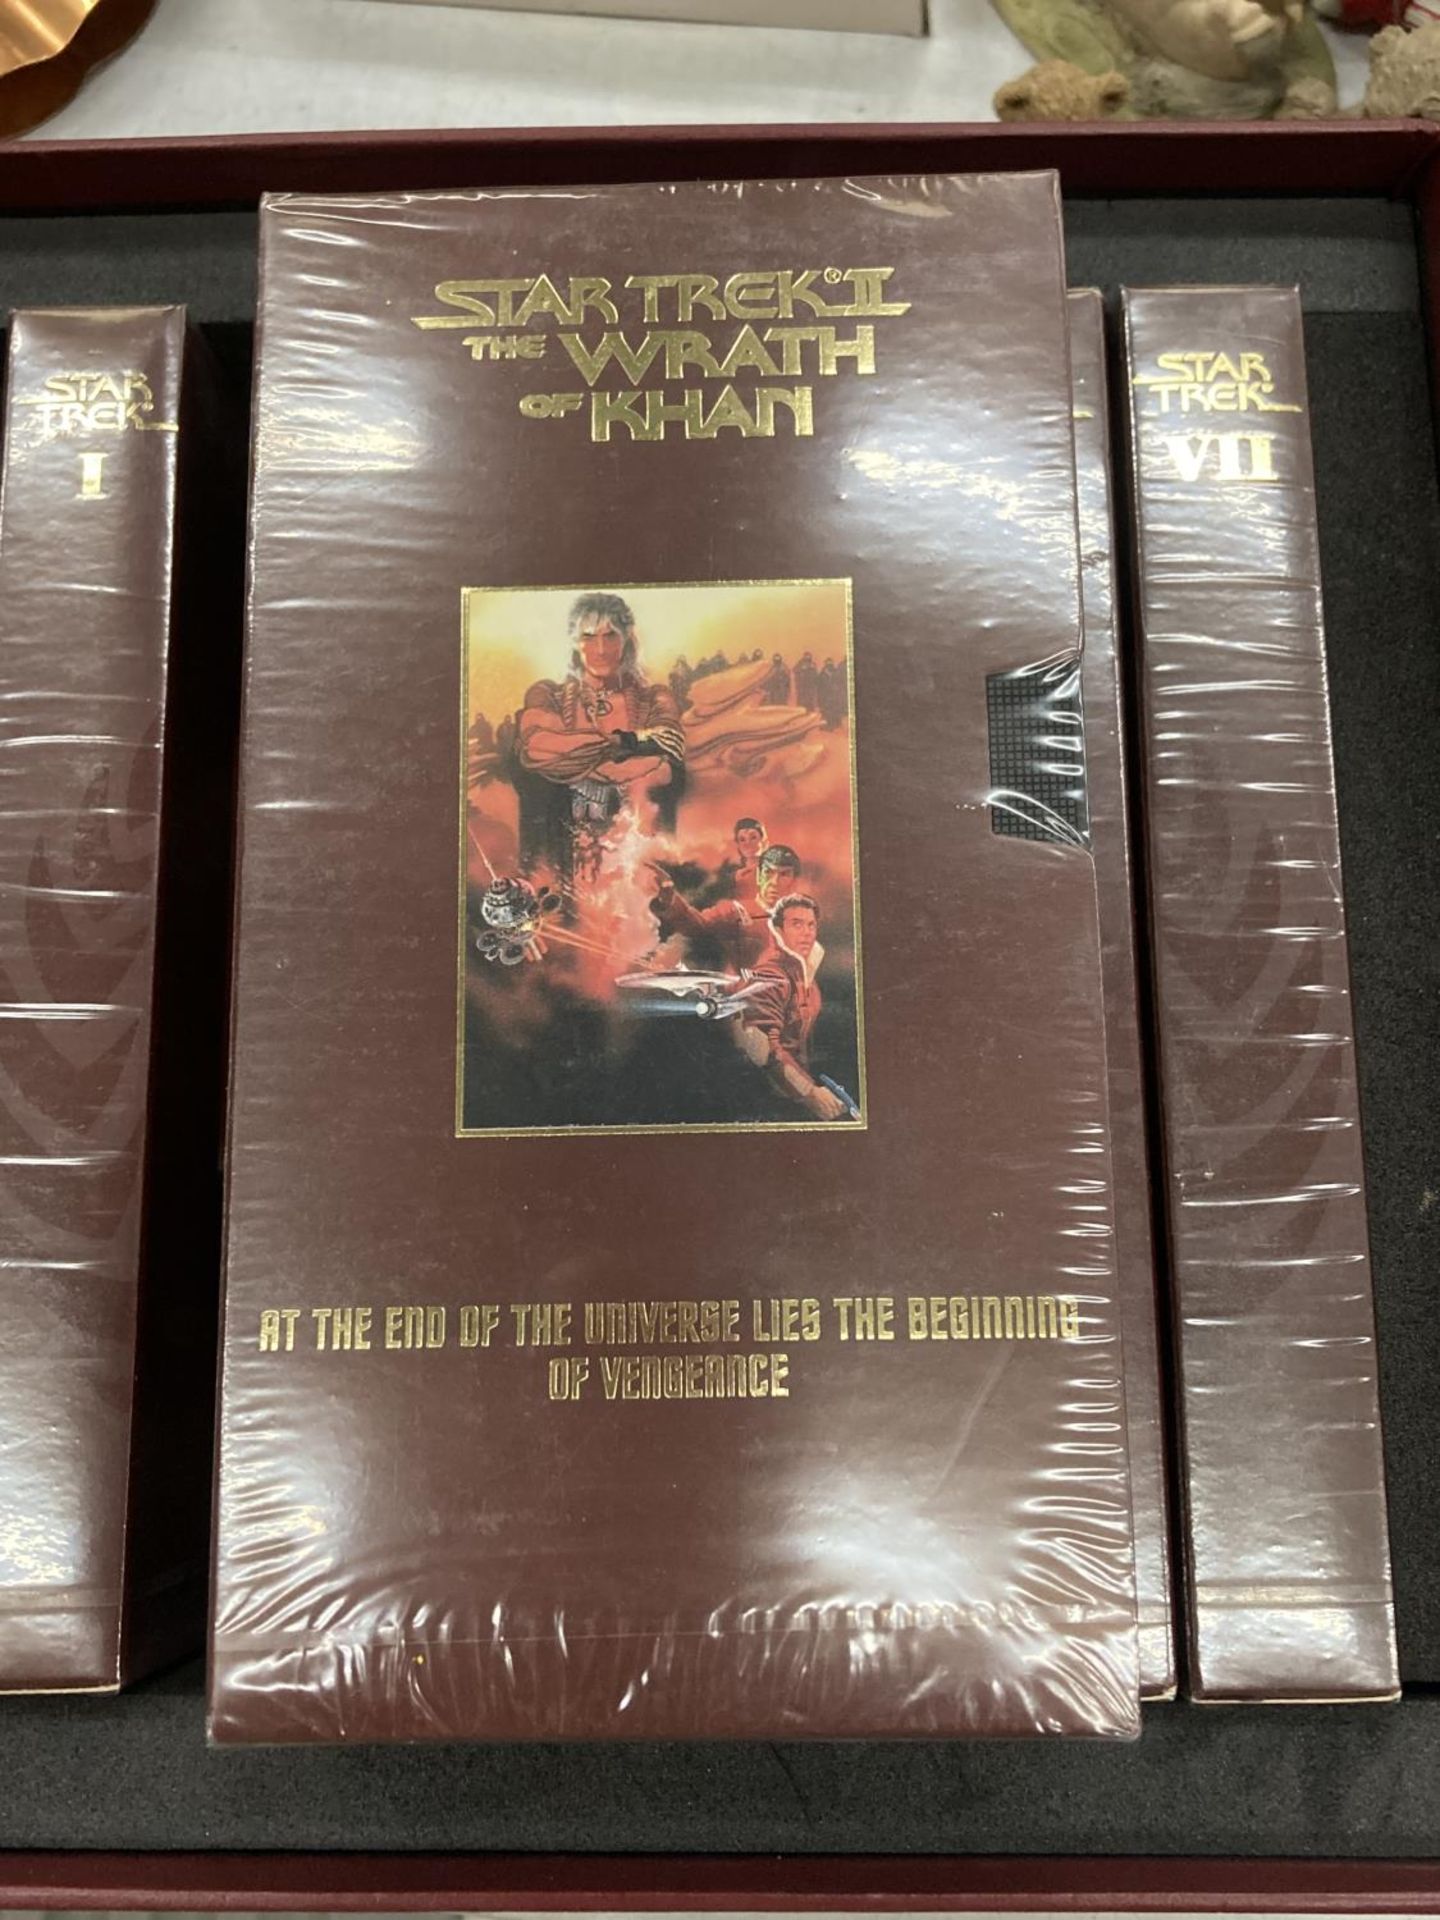 A STAR TREK 30TH ANNIVERSARY EDITION VHS SET IN ORIGINAL BOX - Image 4 of 6